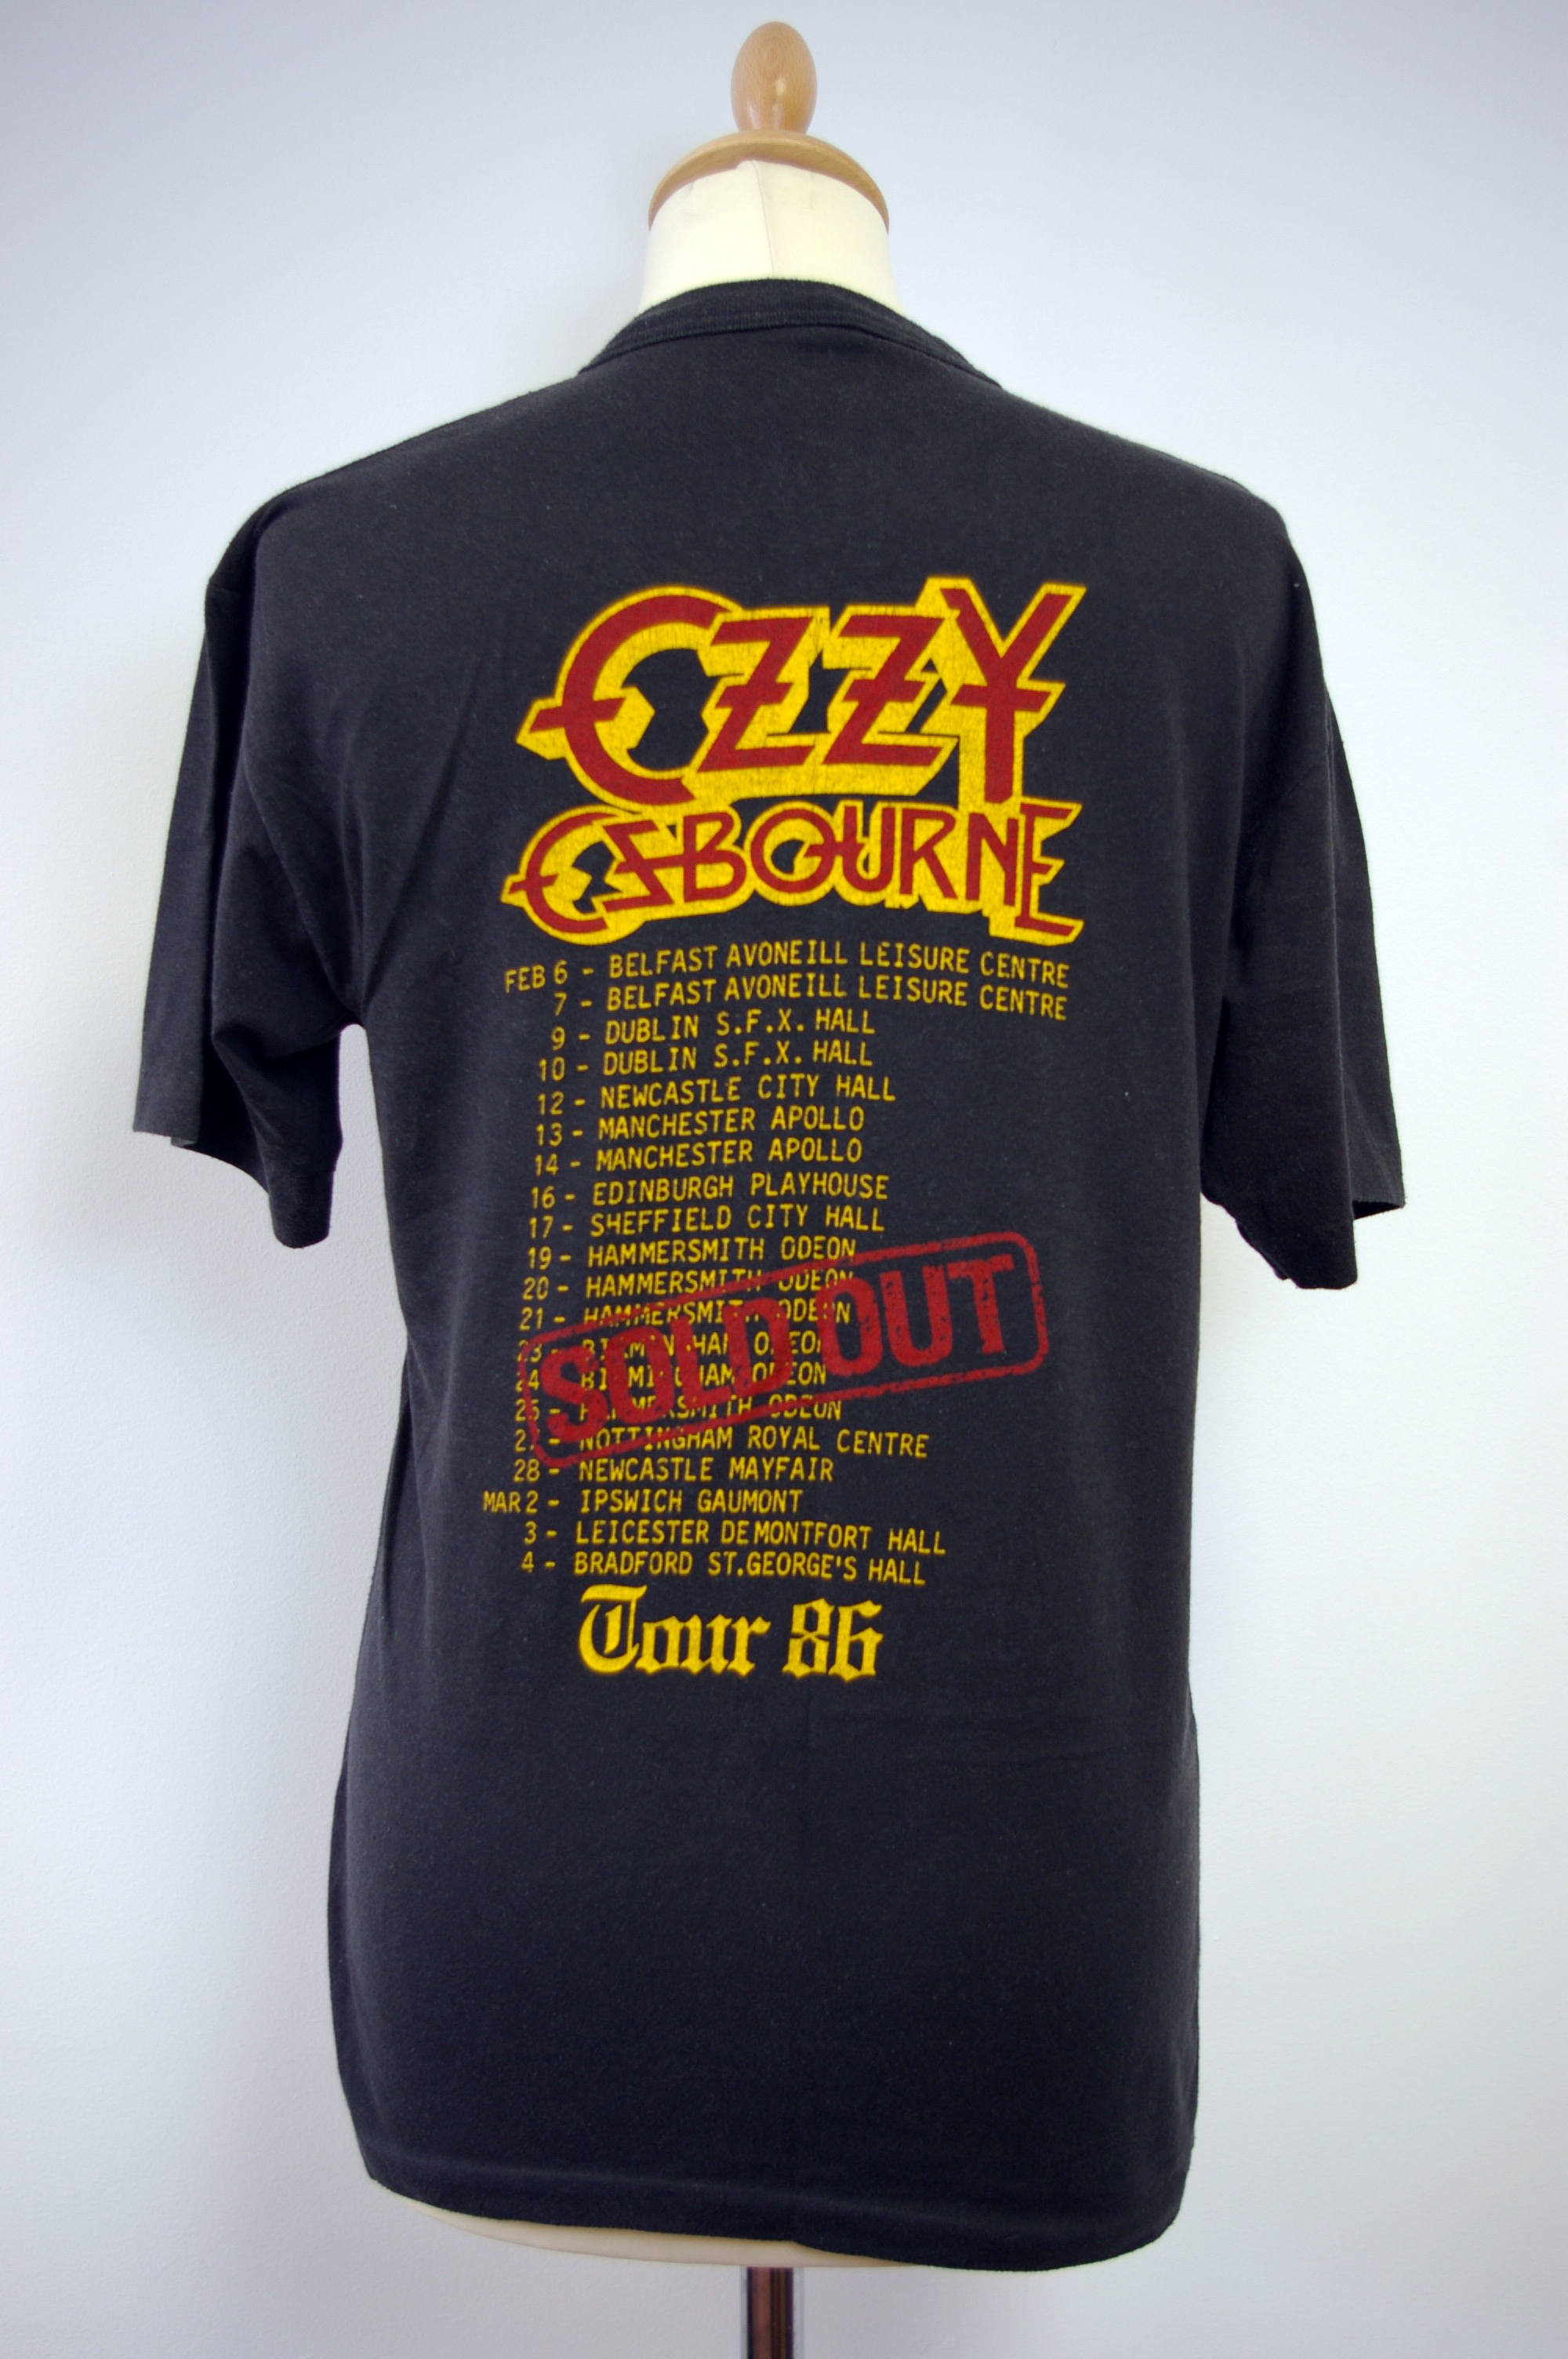 Home of Metal | Ozzy Osbourne 1986 tour t-shirt2000 x 3008